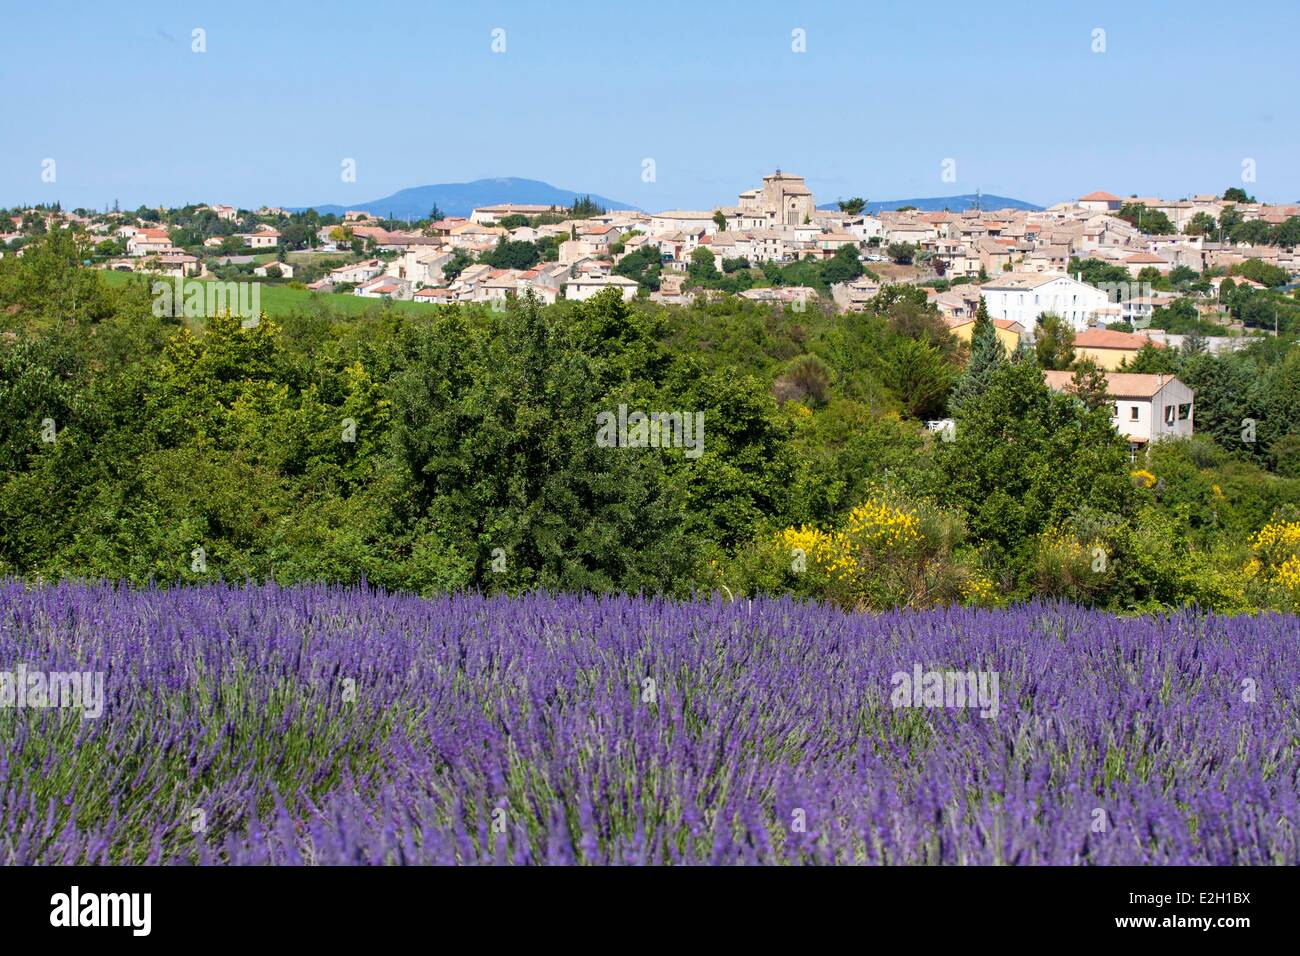 Frankreich-Alpes de Haute Provence Parc Naturel Regional du Verdon (natürlichen regionalen Park der Verdon) Valensole Lavendel Feld vor Valensole Dorf Stockfoto